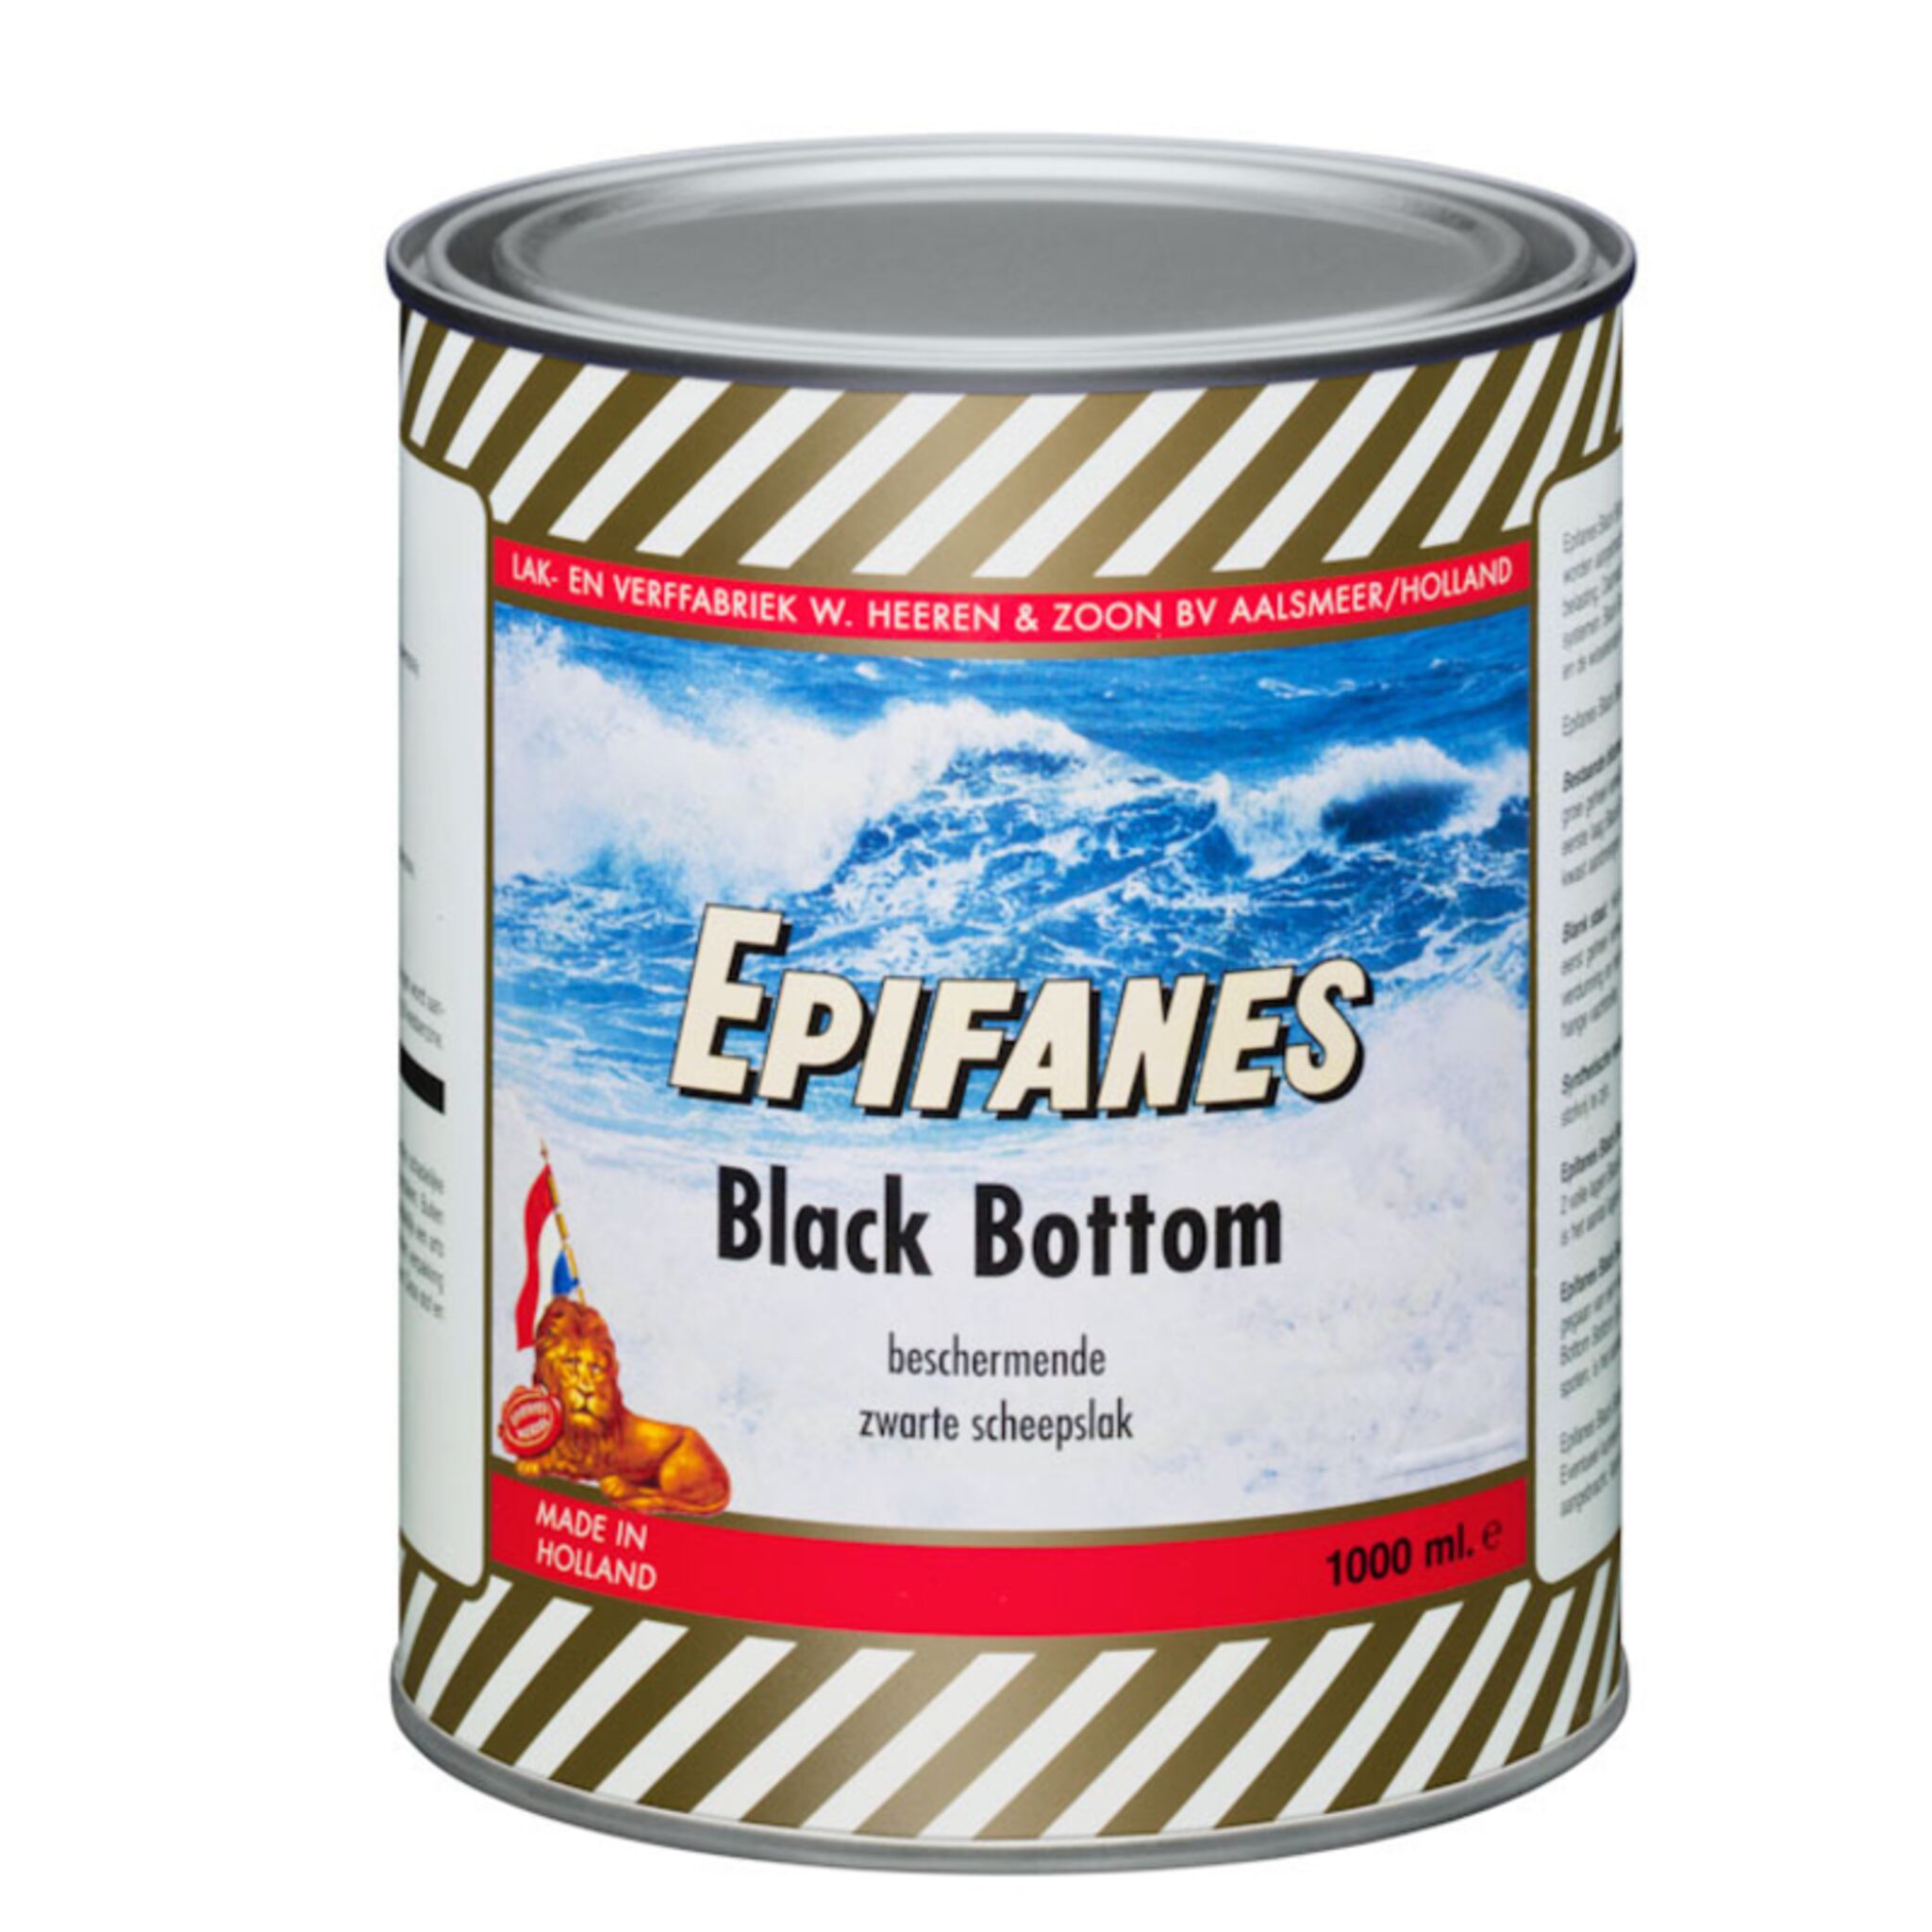 EPIFANES Black Bottom marine varnish 1l in black